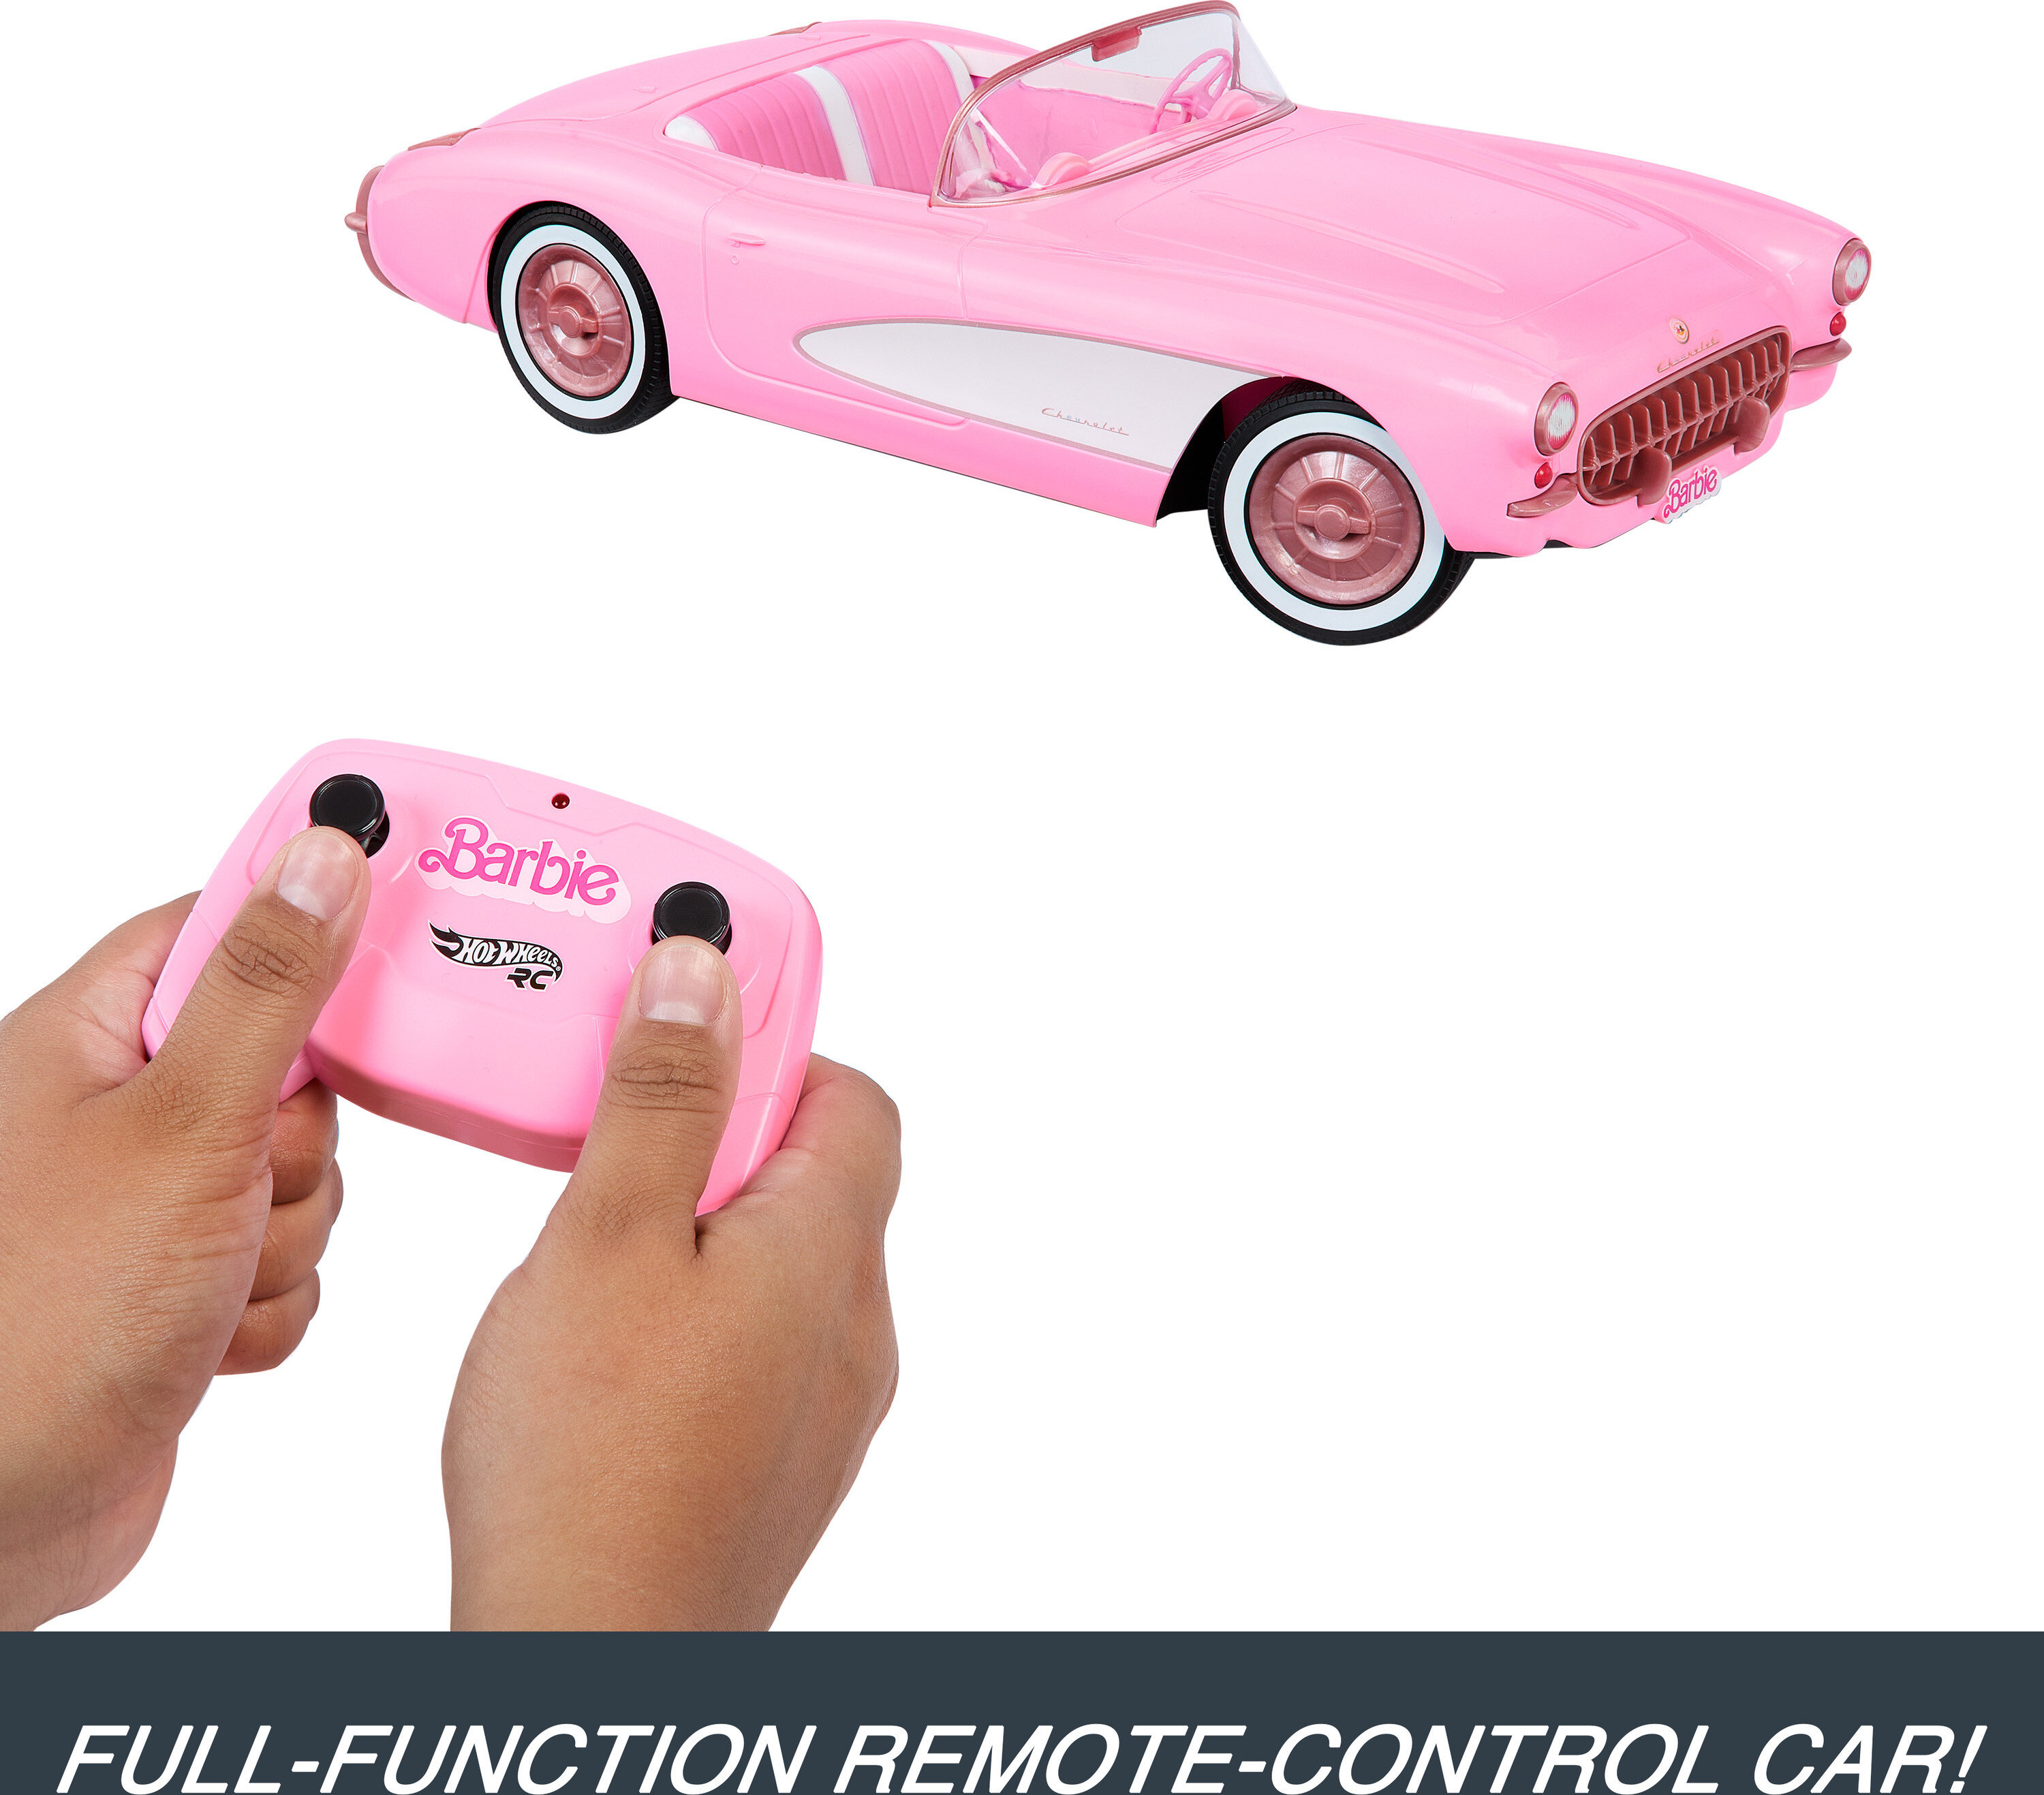 Hot Wheels RC Barbie Corvette, Remote Control Corvette from Barbie The Movie - image 4 of 6